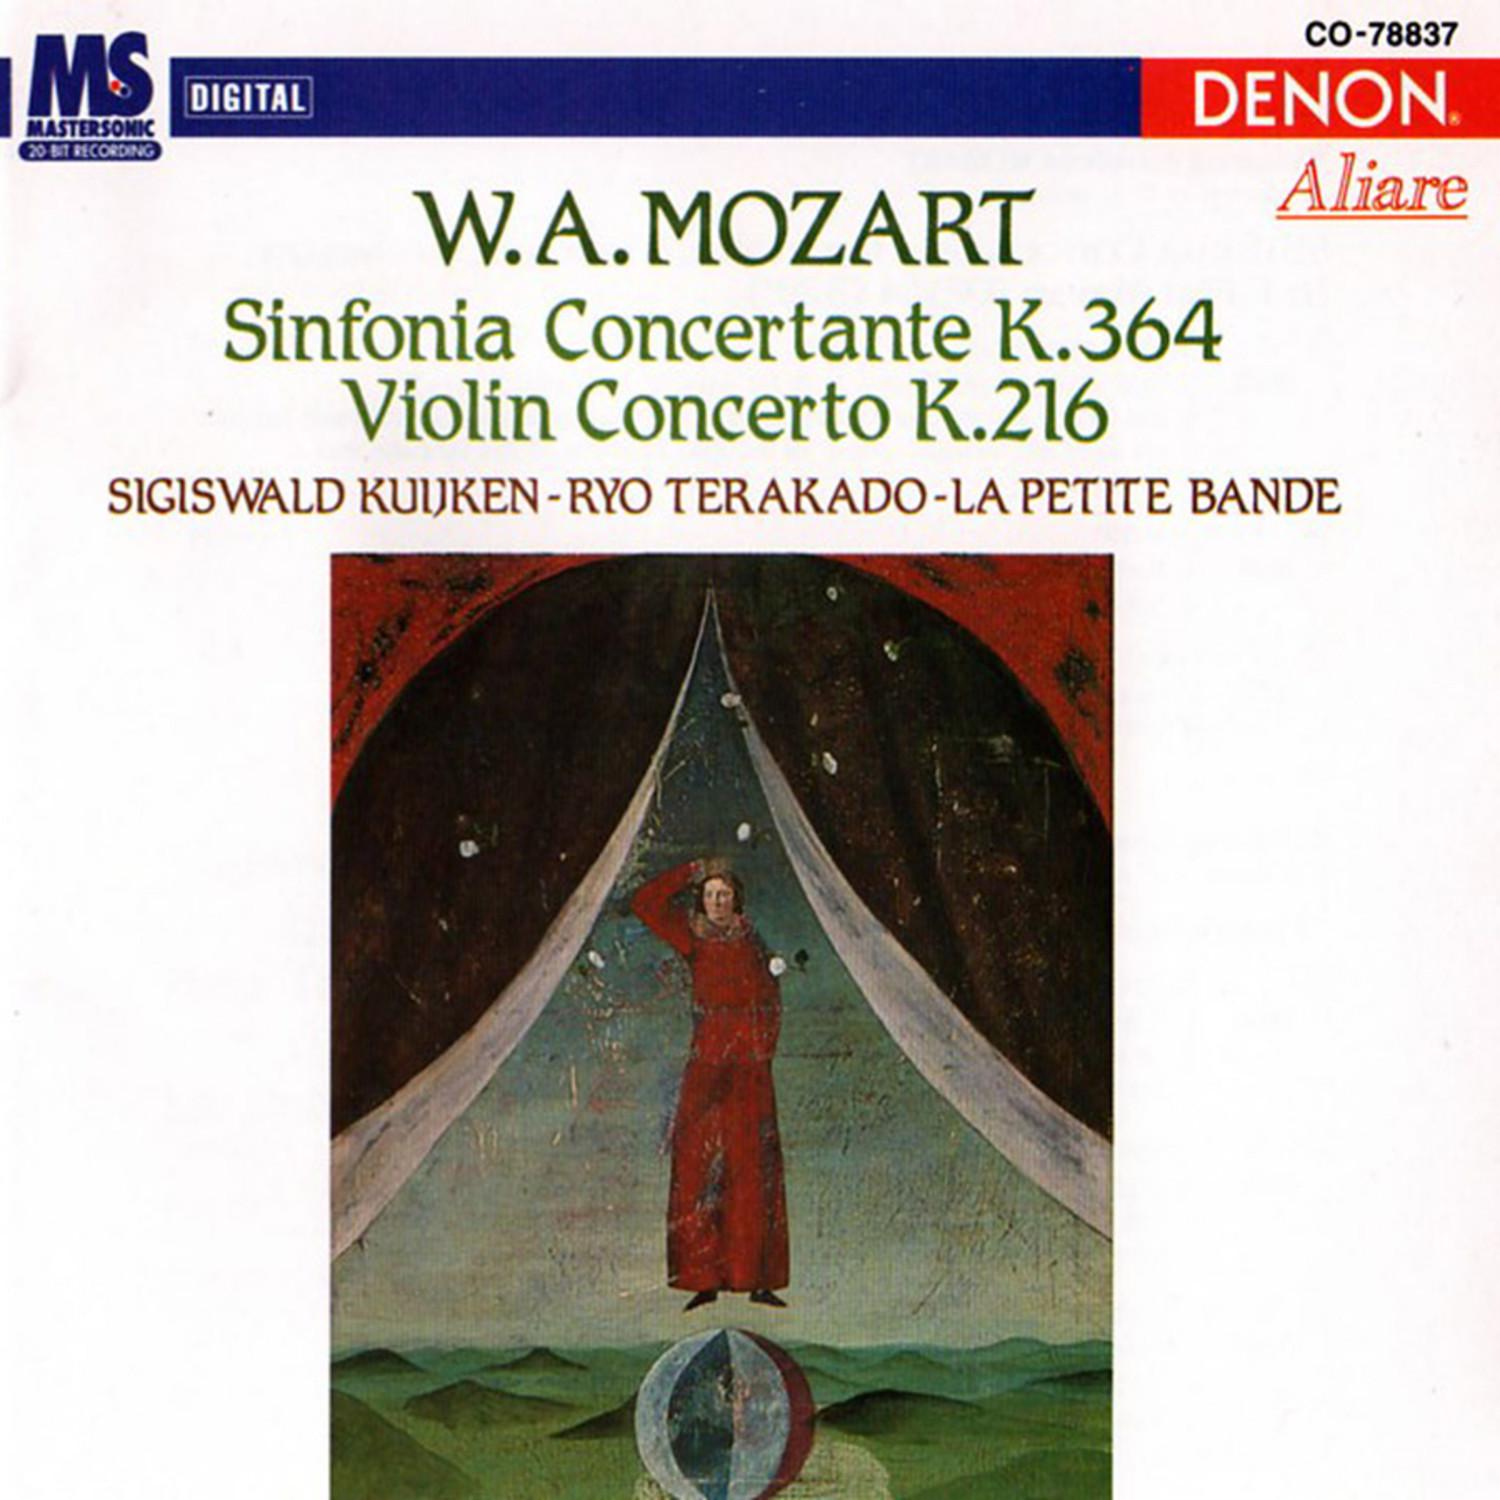 Sinfonia Concertante in E-Flat Major, K. 364: I. Allegro maestoso